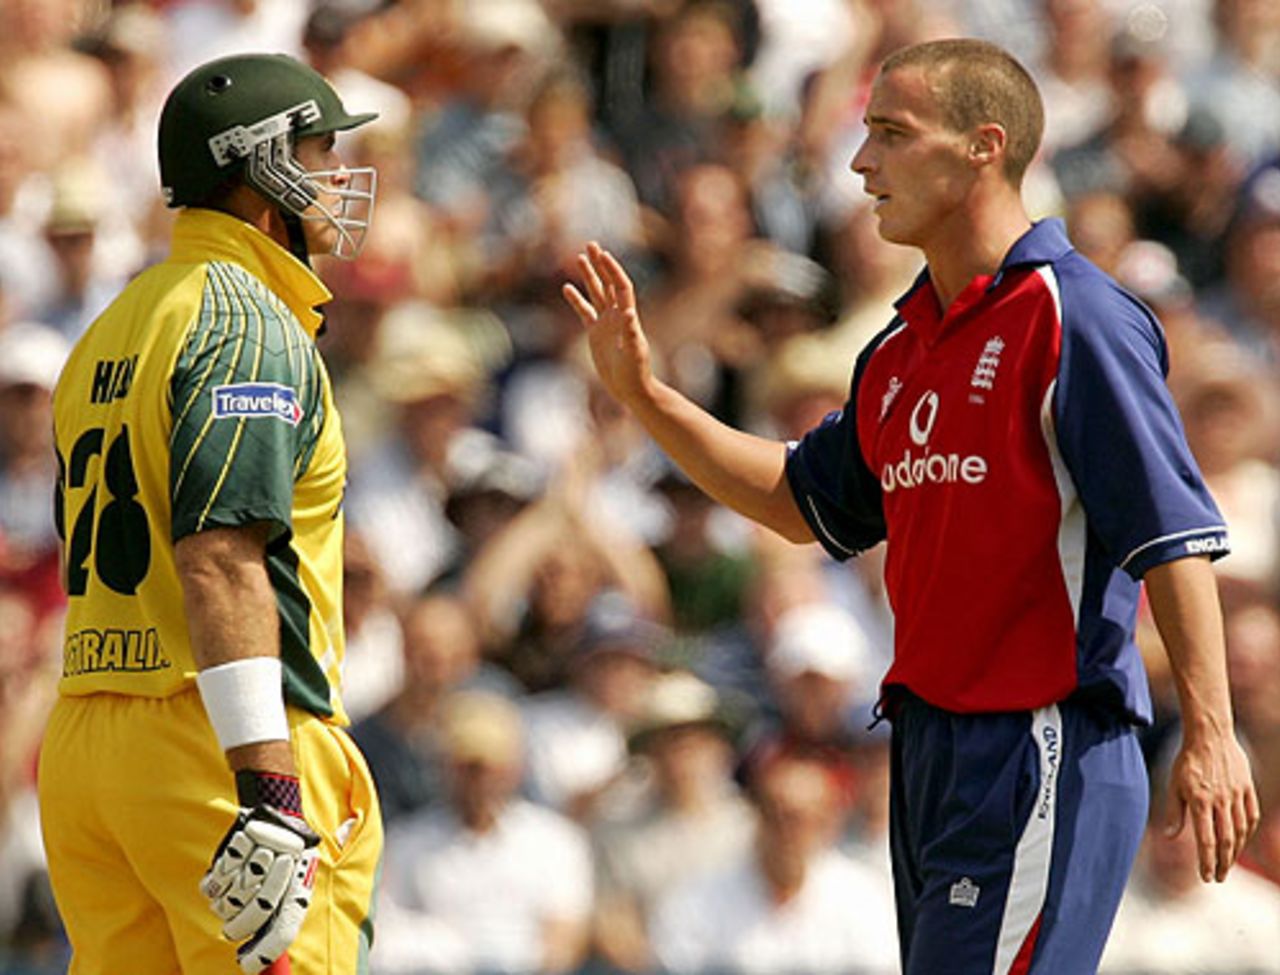 Simon Jones apologises to Matthew Hayden after striking him on the shoulder at Edgbaston, England v Australia, June 28, 2005